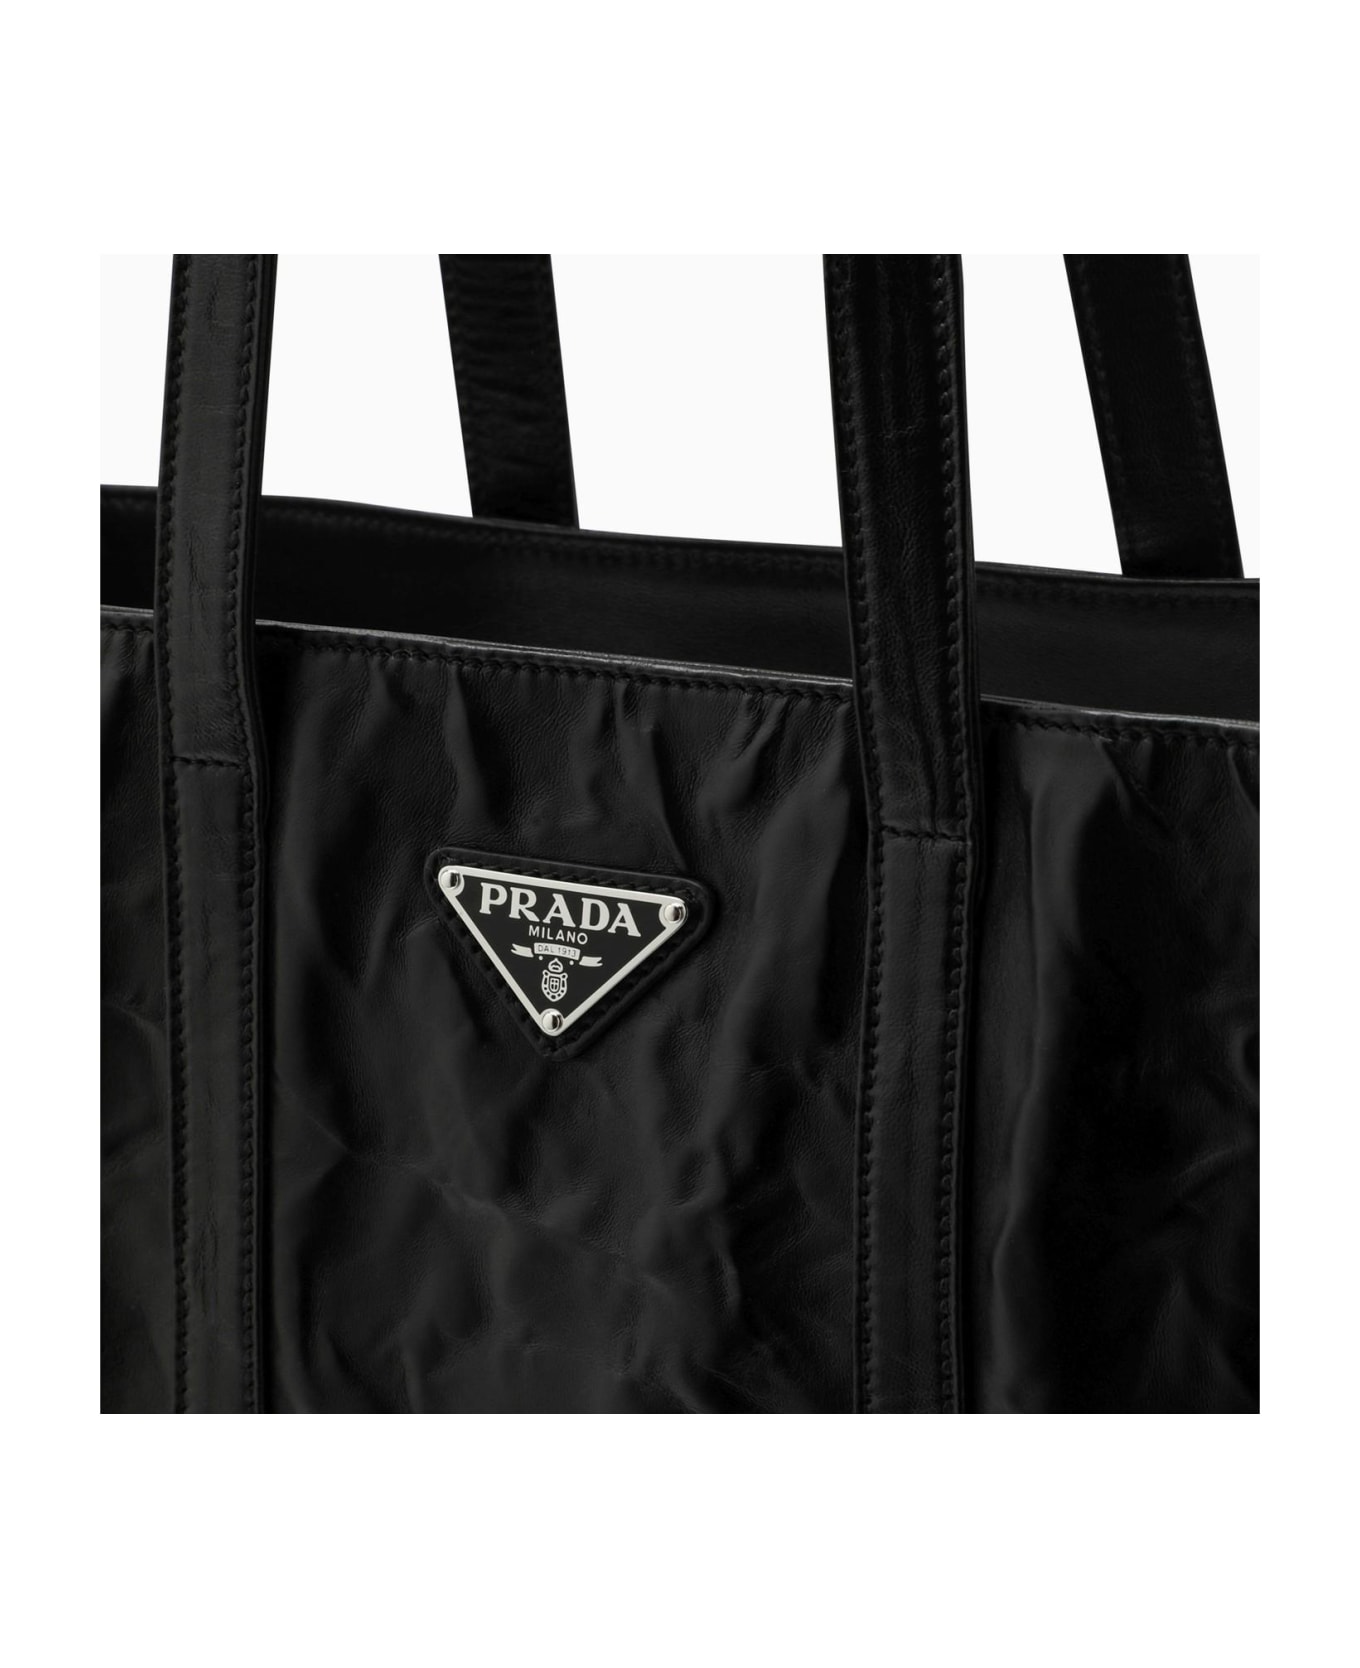 Prada Black Leather Bag